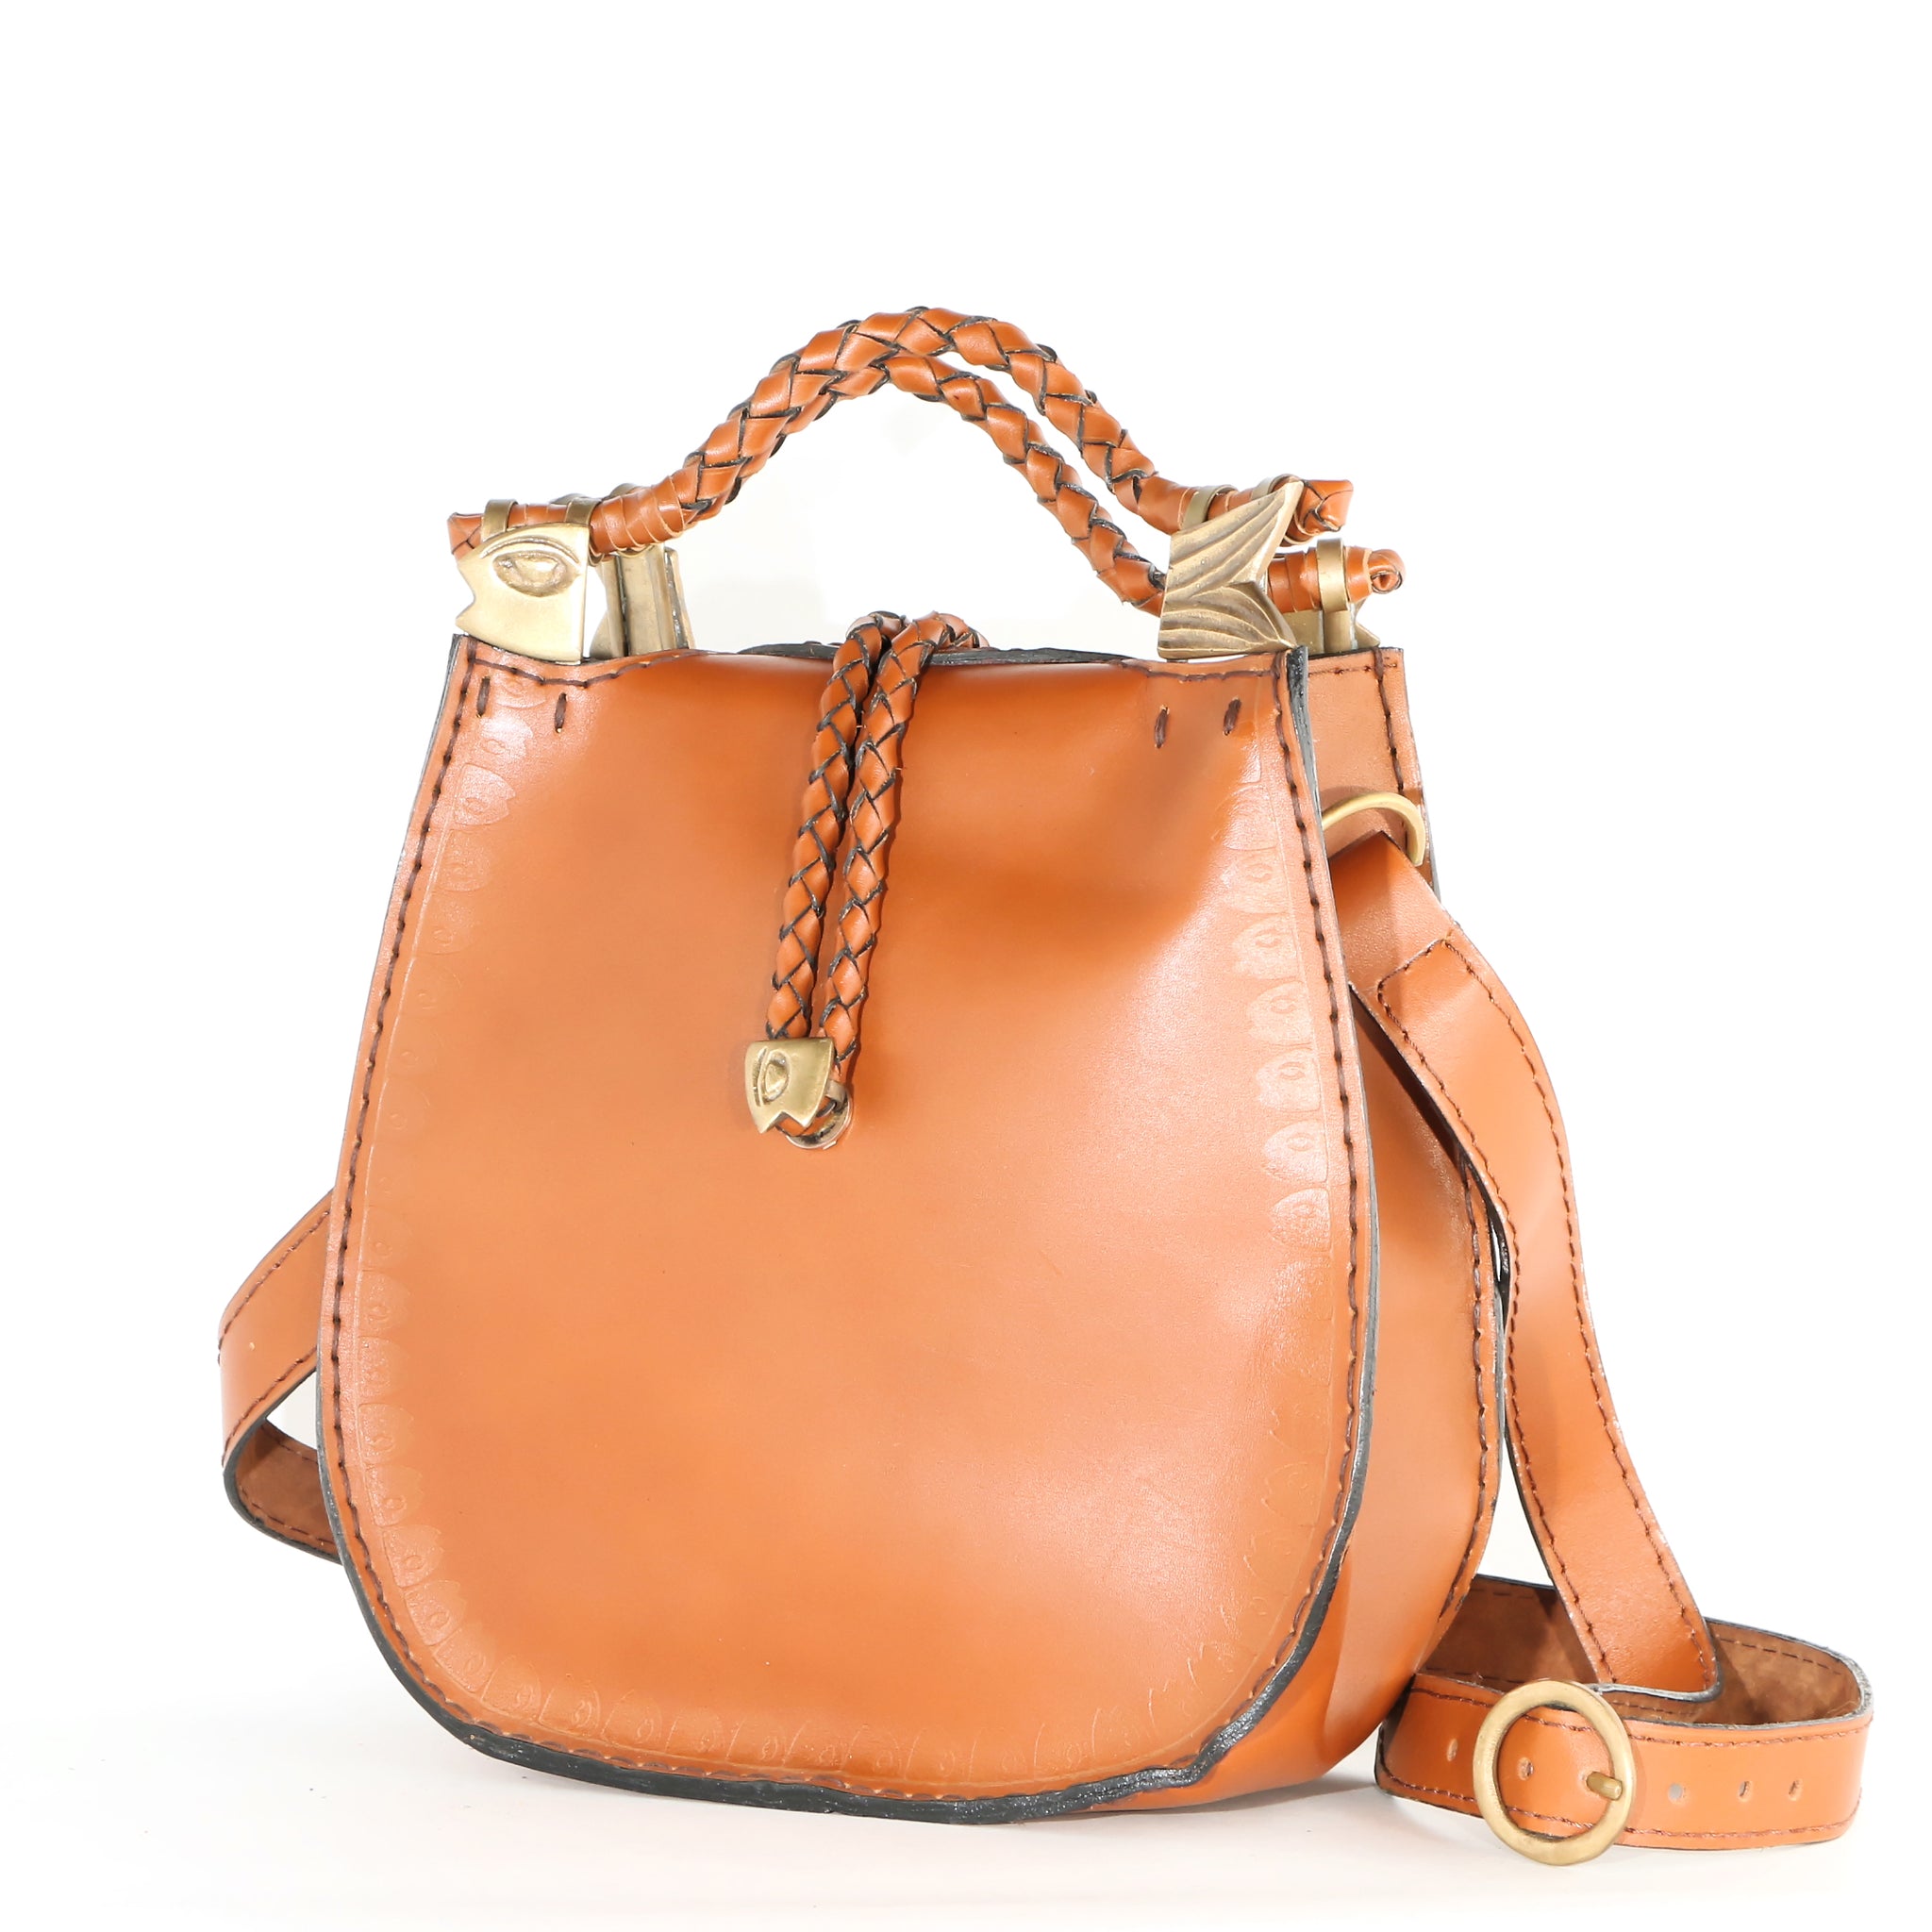 Handbags | Designer Crossbody, Raffia, Leather & Suede Handbags – Dolce Vita